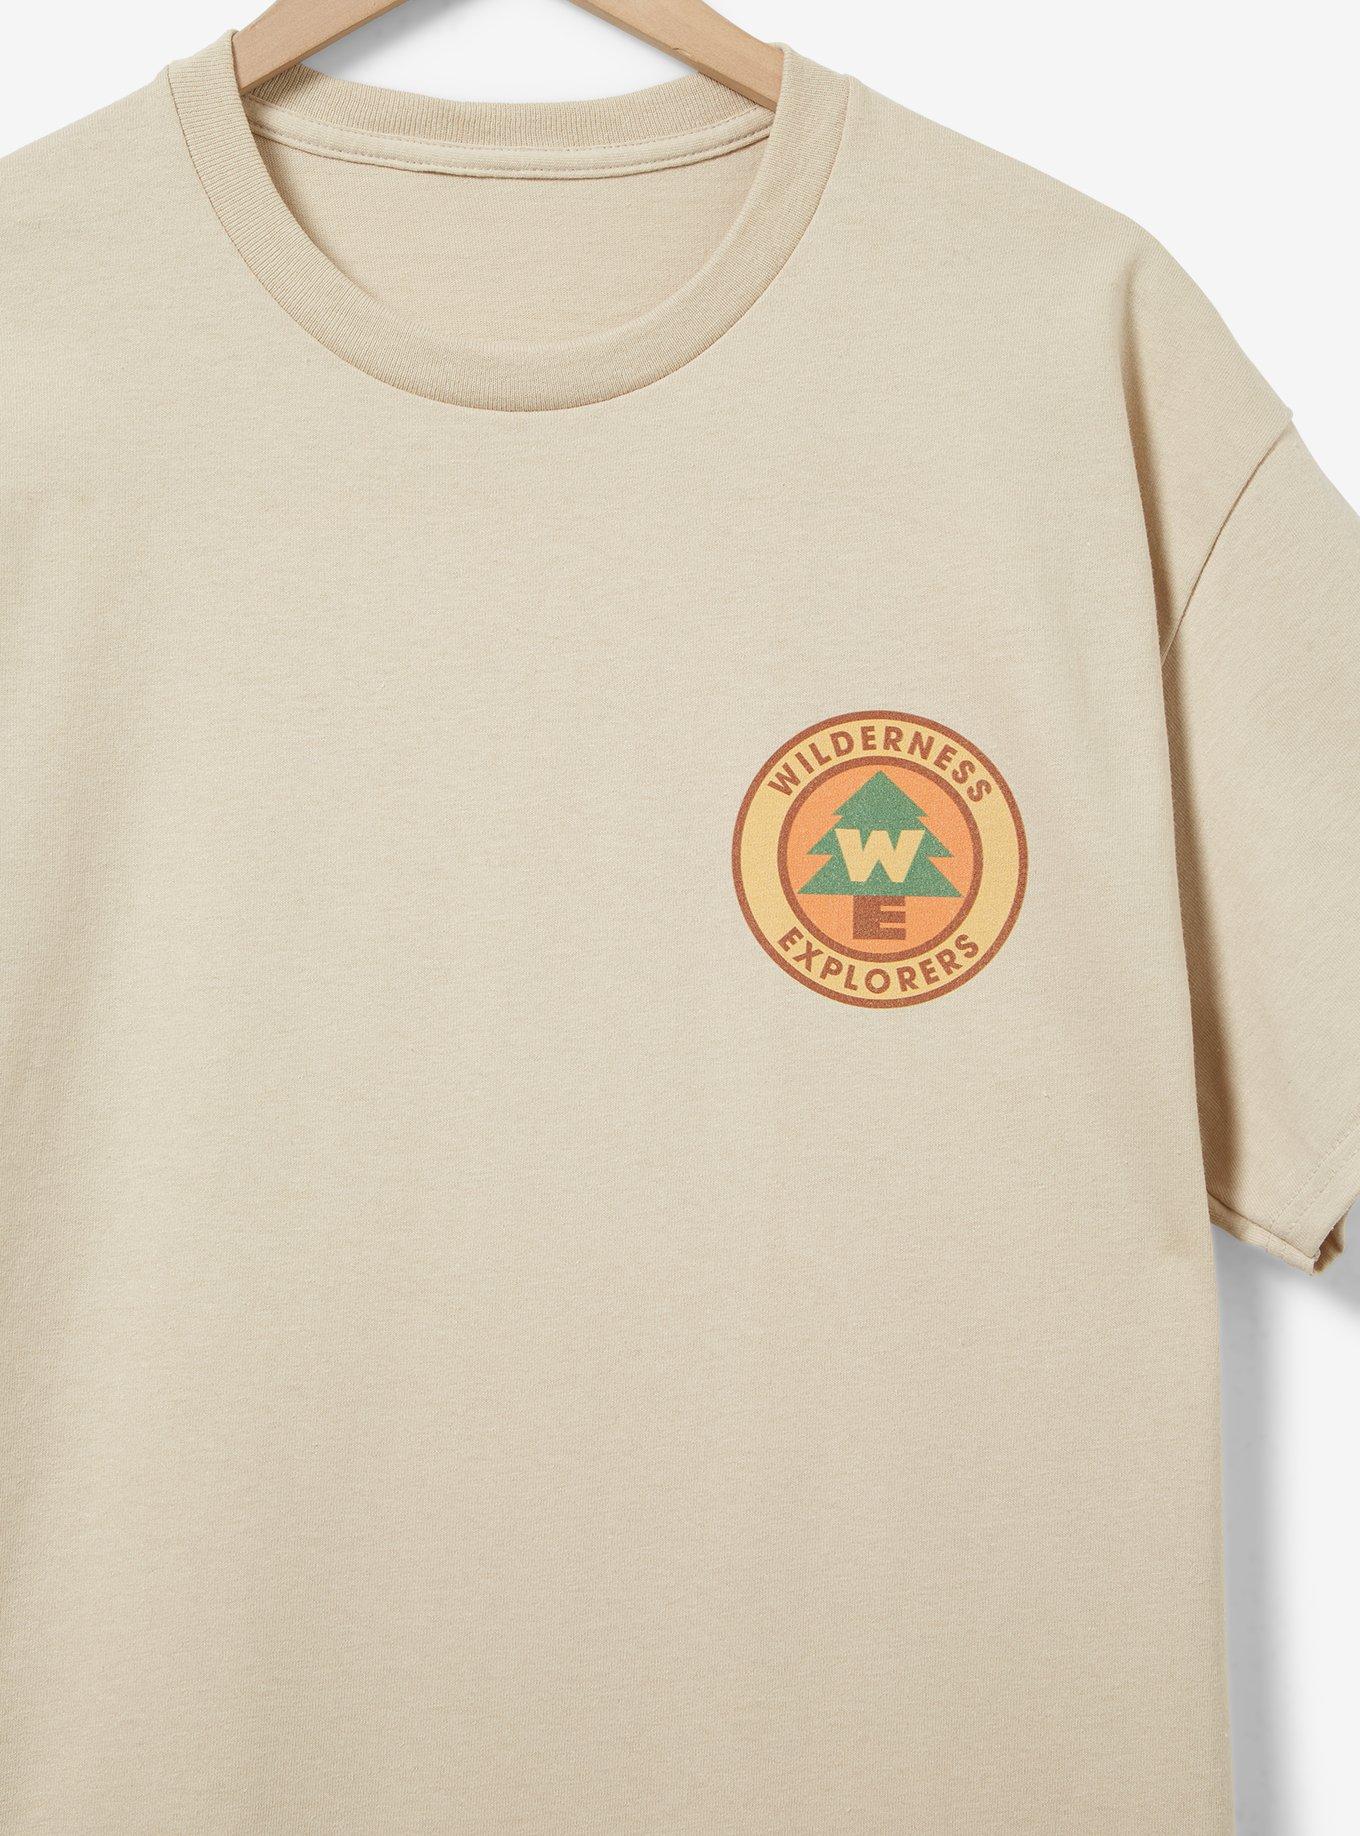 Disney Pixar Up Wilderness Explorer Badge T-Shirt — BoxLunch Exclusive, LIGHT GREY, alternate